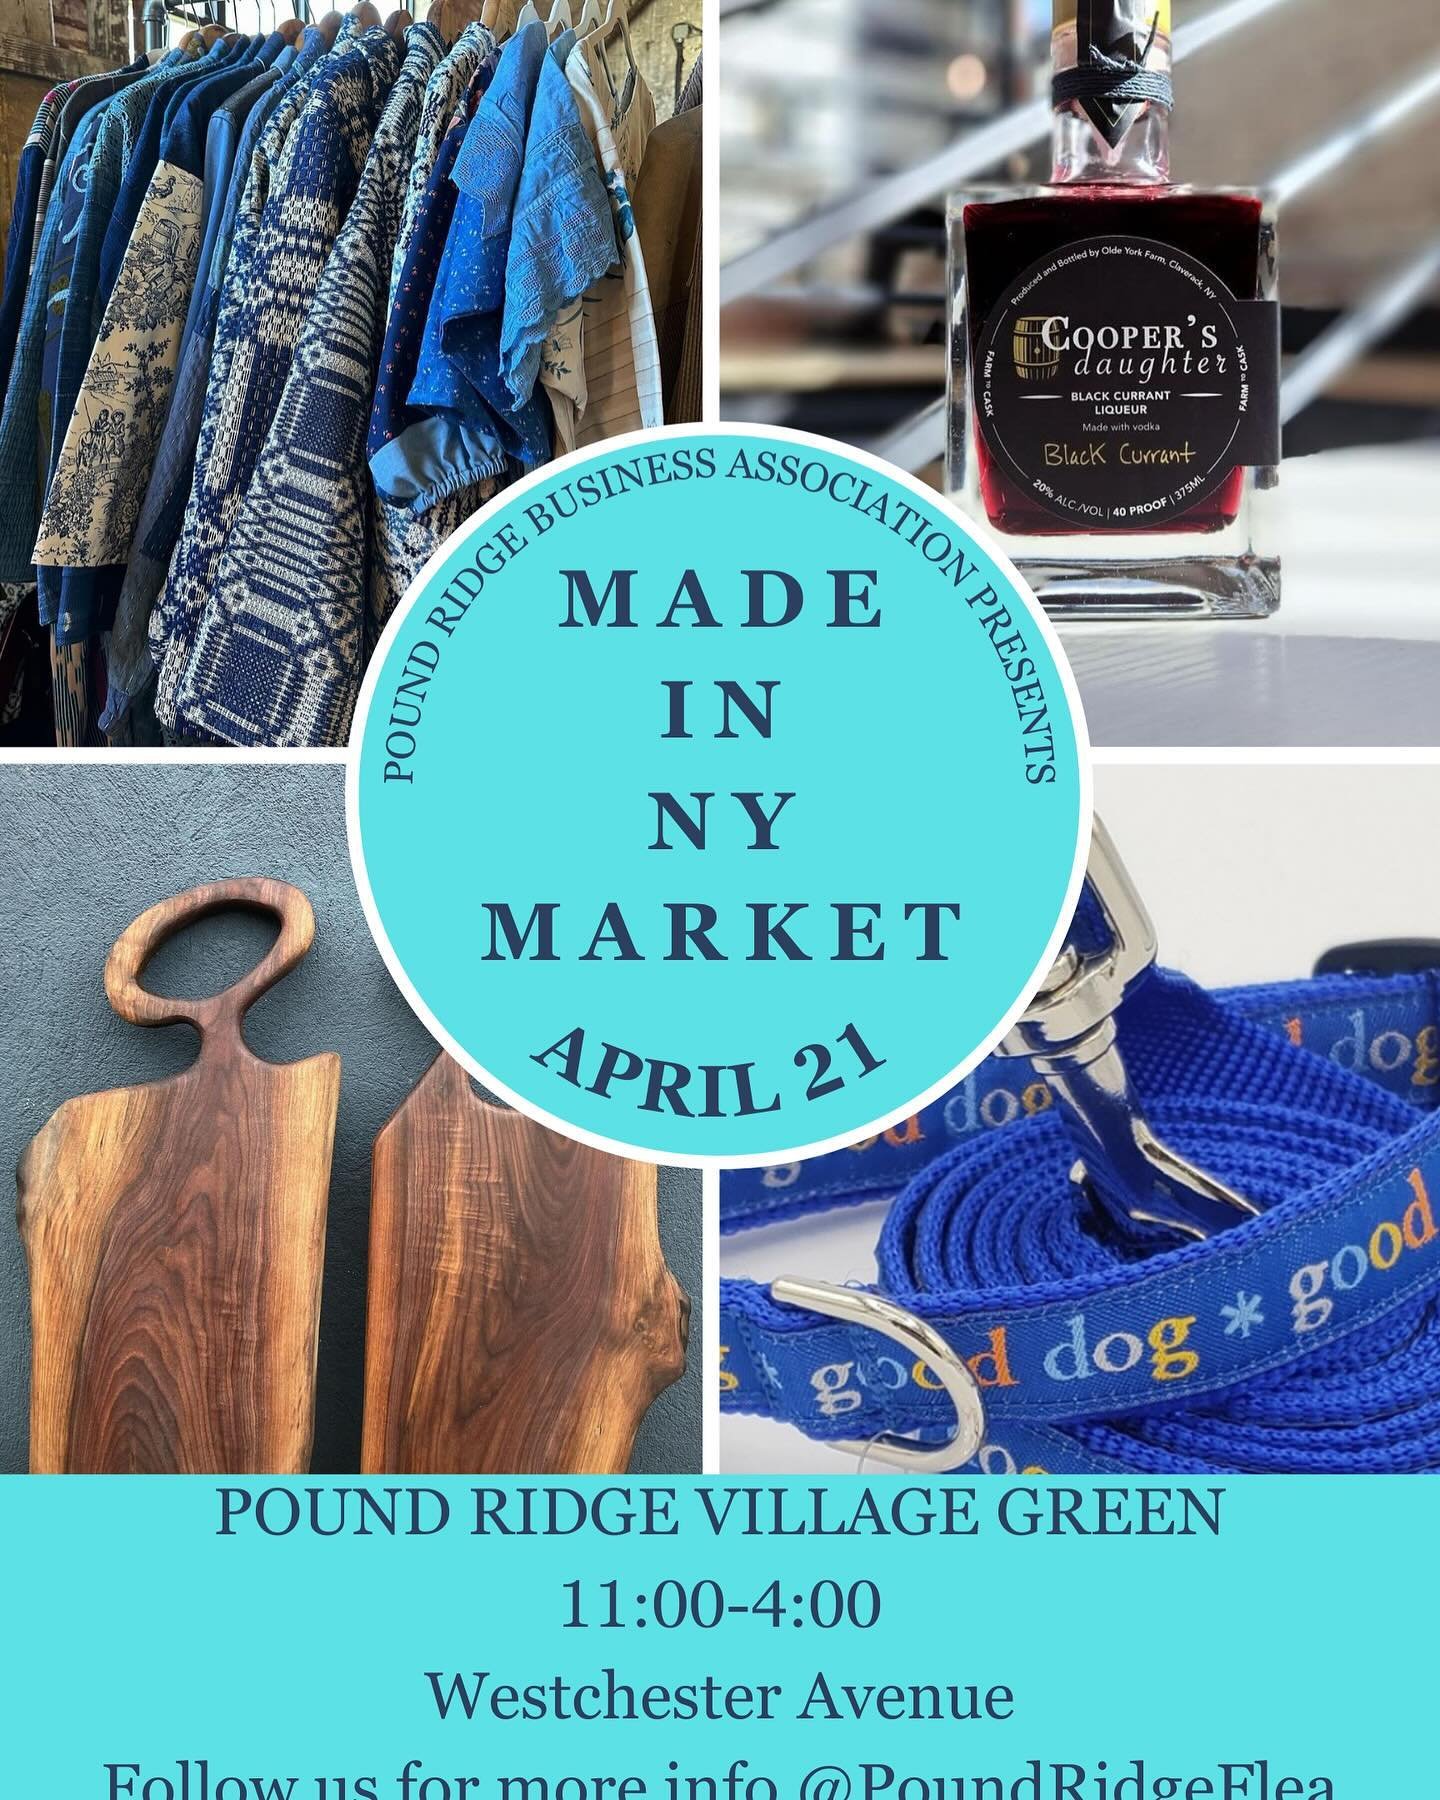 Made in NY is this Sunday, April 21 from 11:00-4:00 in Pound Ridge&rsquo;s village green. @artisanmarket #madeinny #poundridge @shoppoundridge